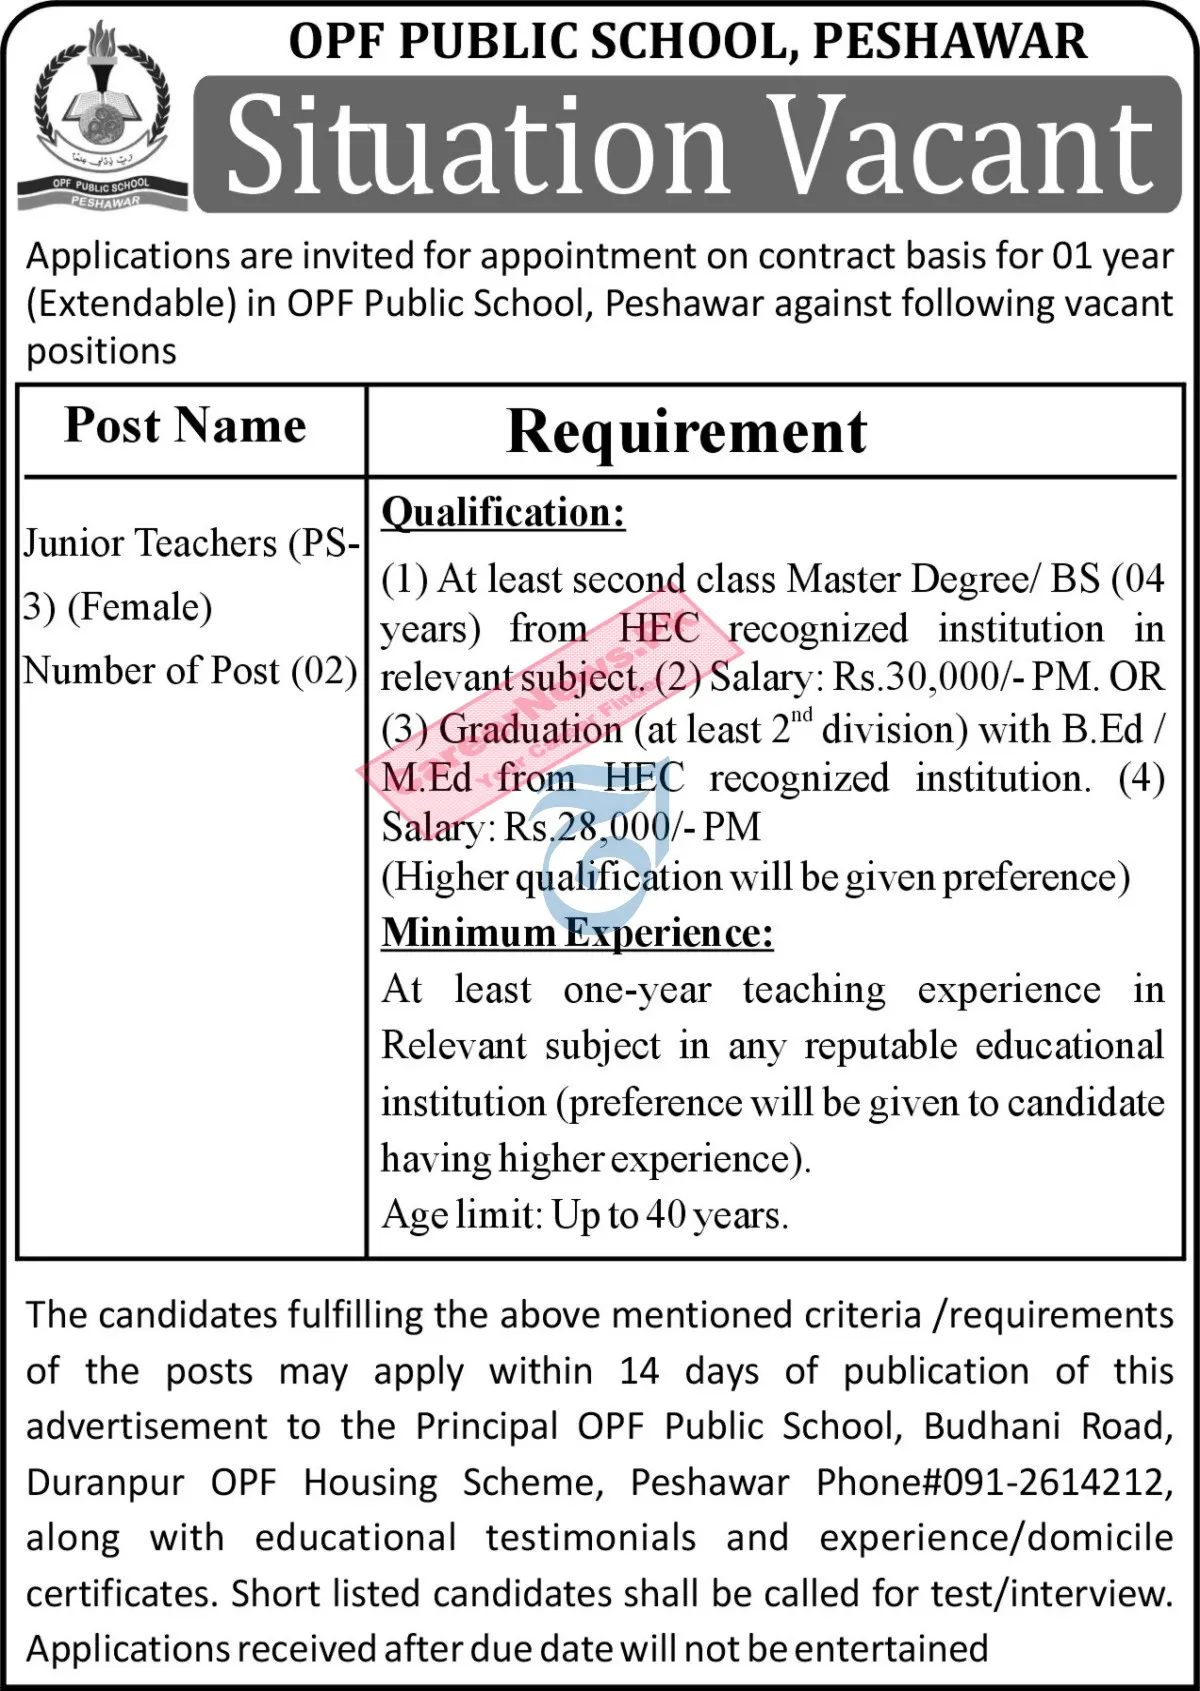 OPF Public School Peshawar Jobs 2024